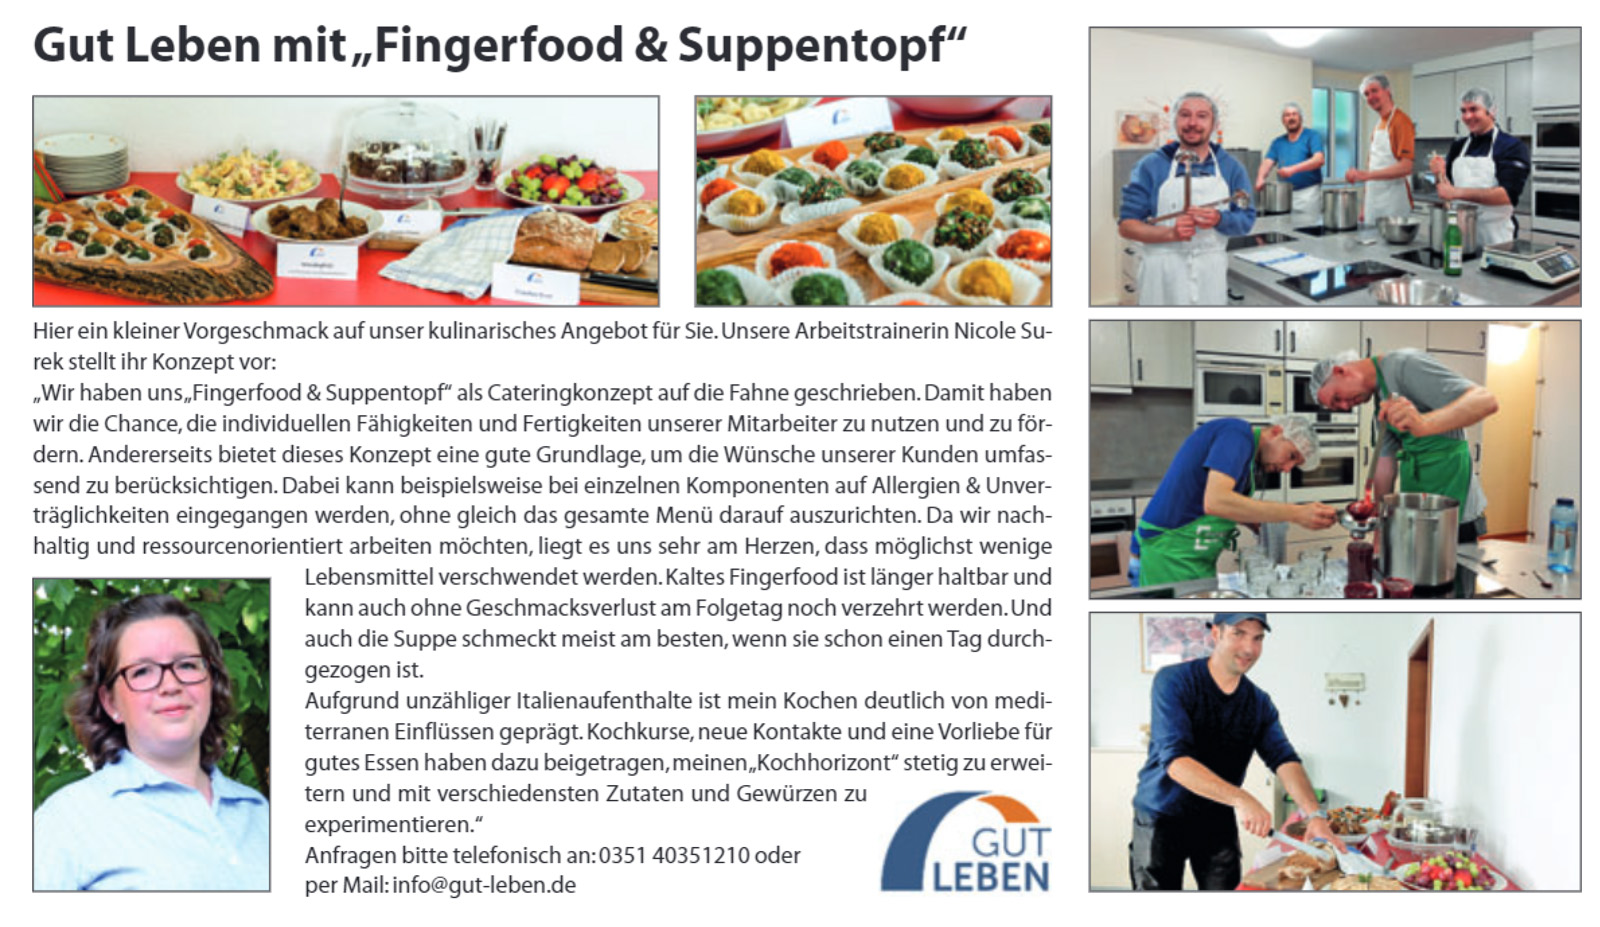 Gut Leben mit "Fingerfood & Suppentopf"